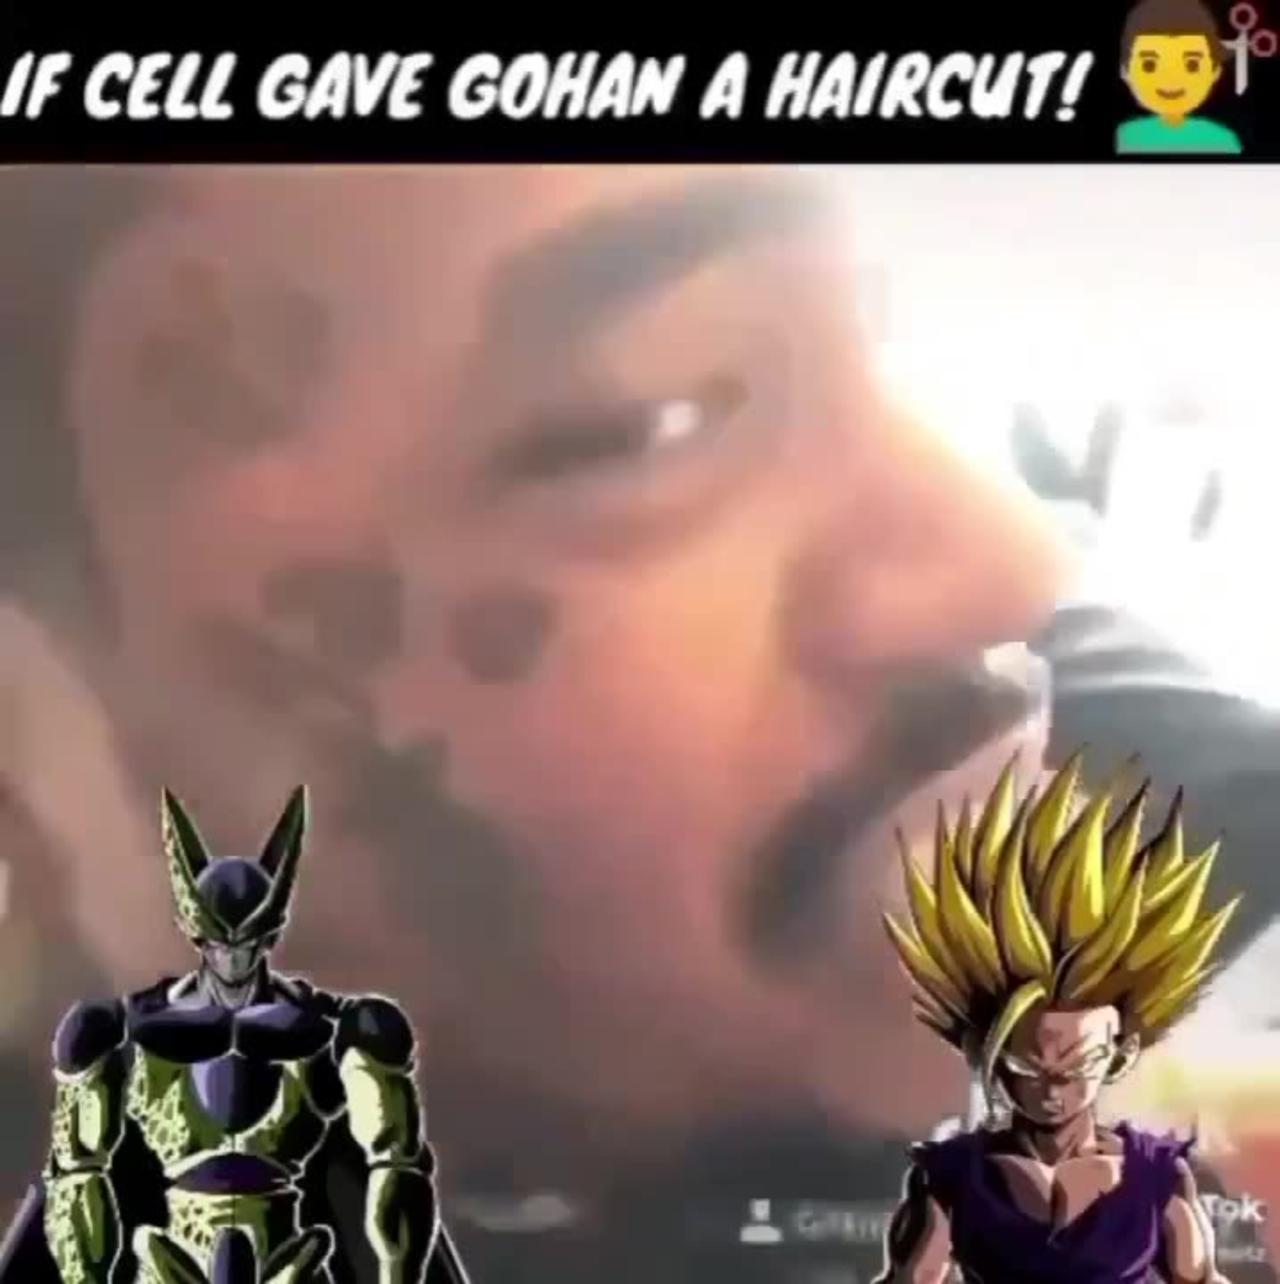 If Cell Gave Gohan a Haircut